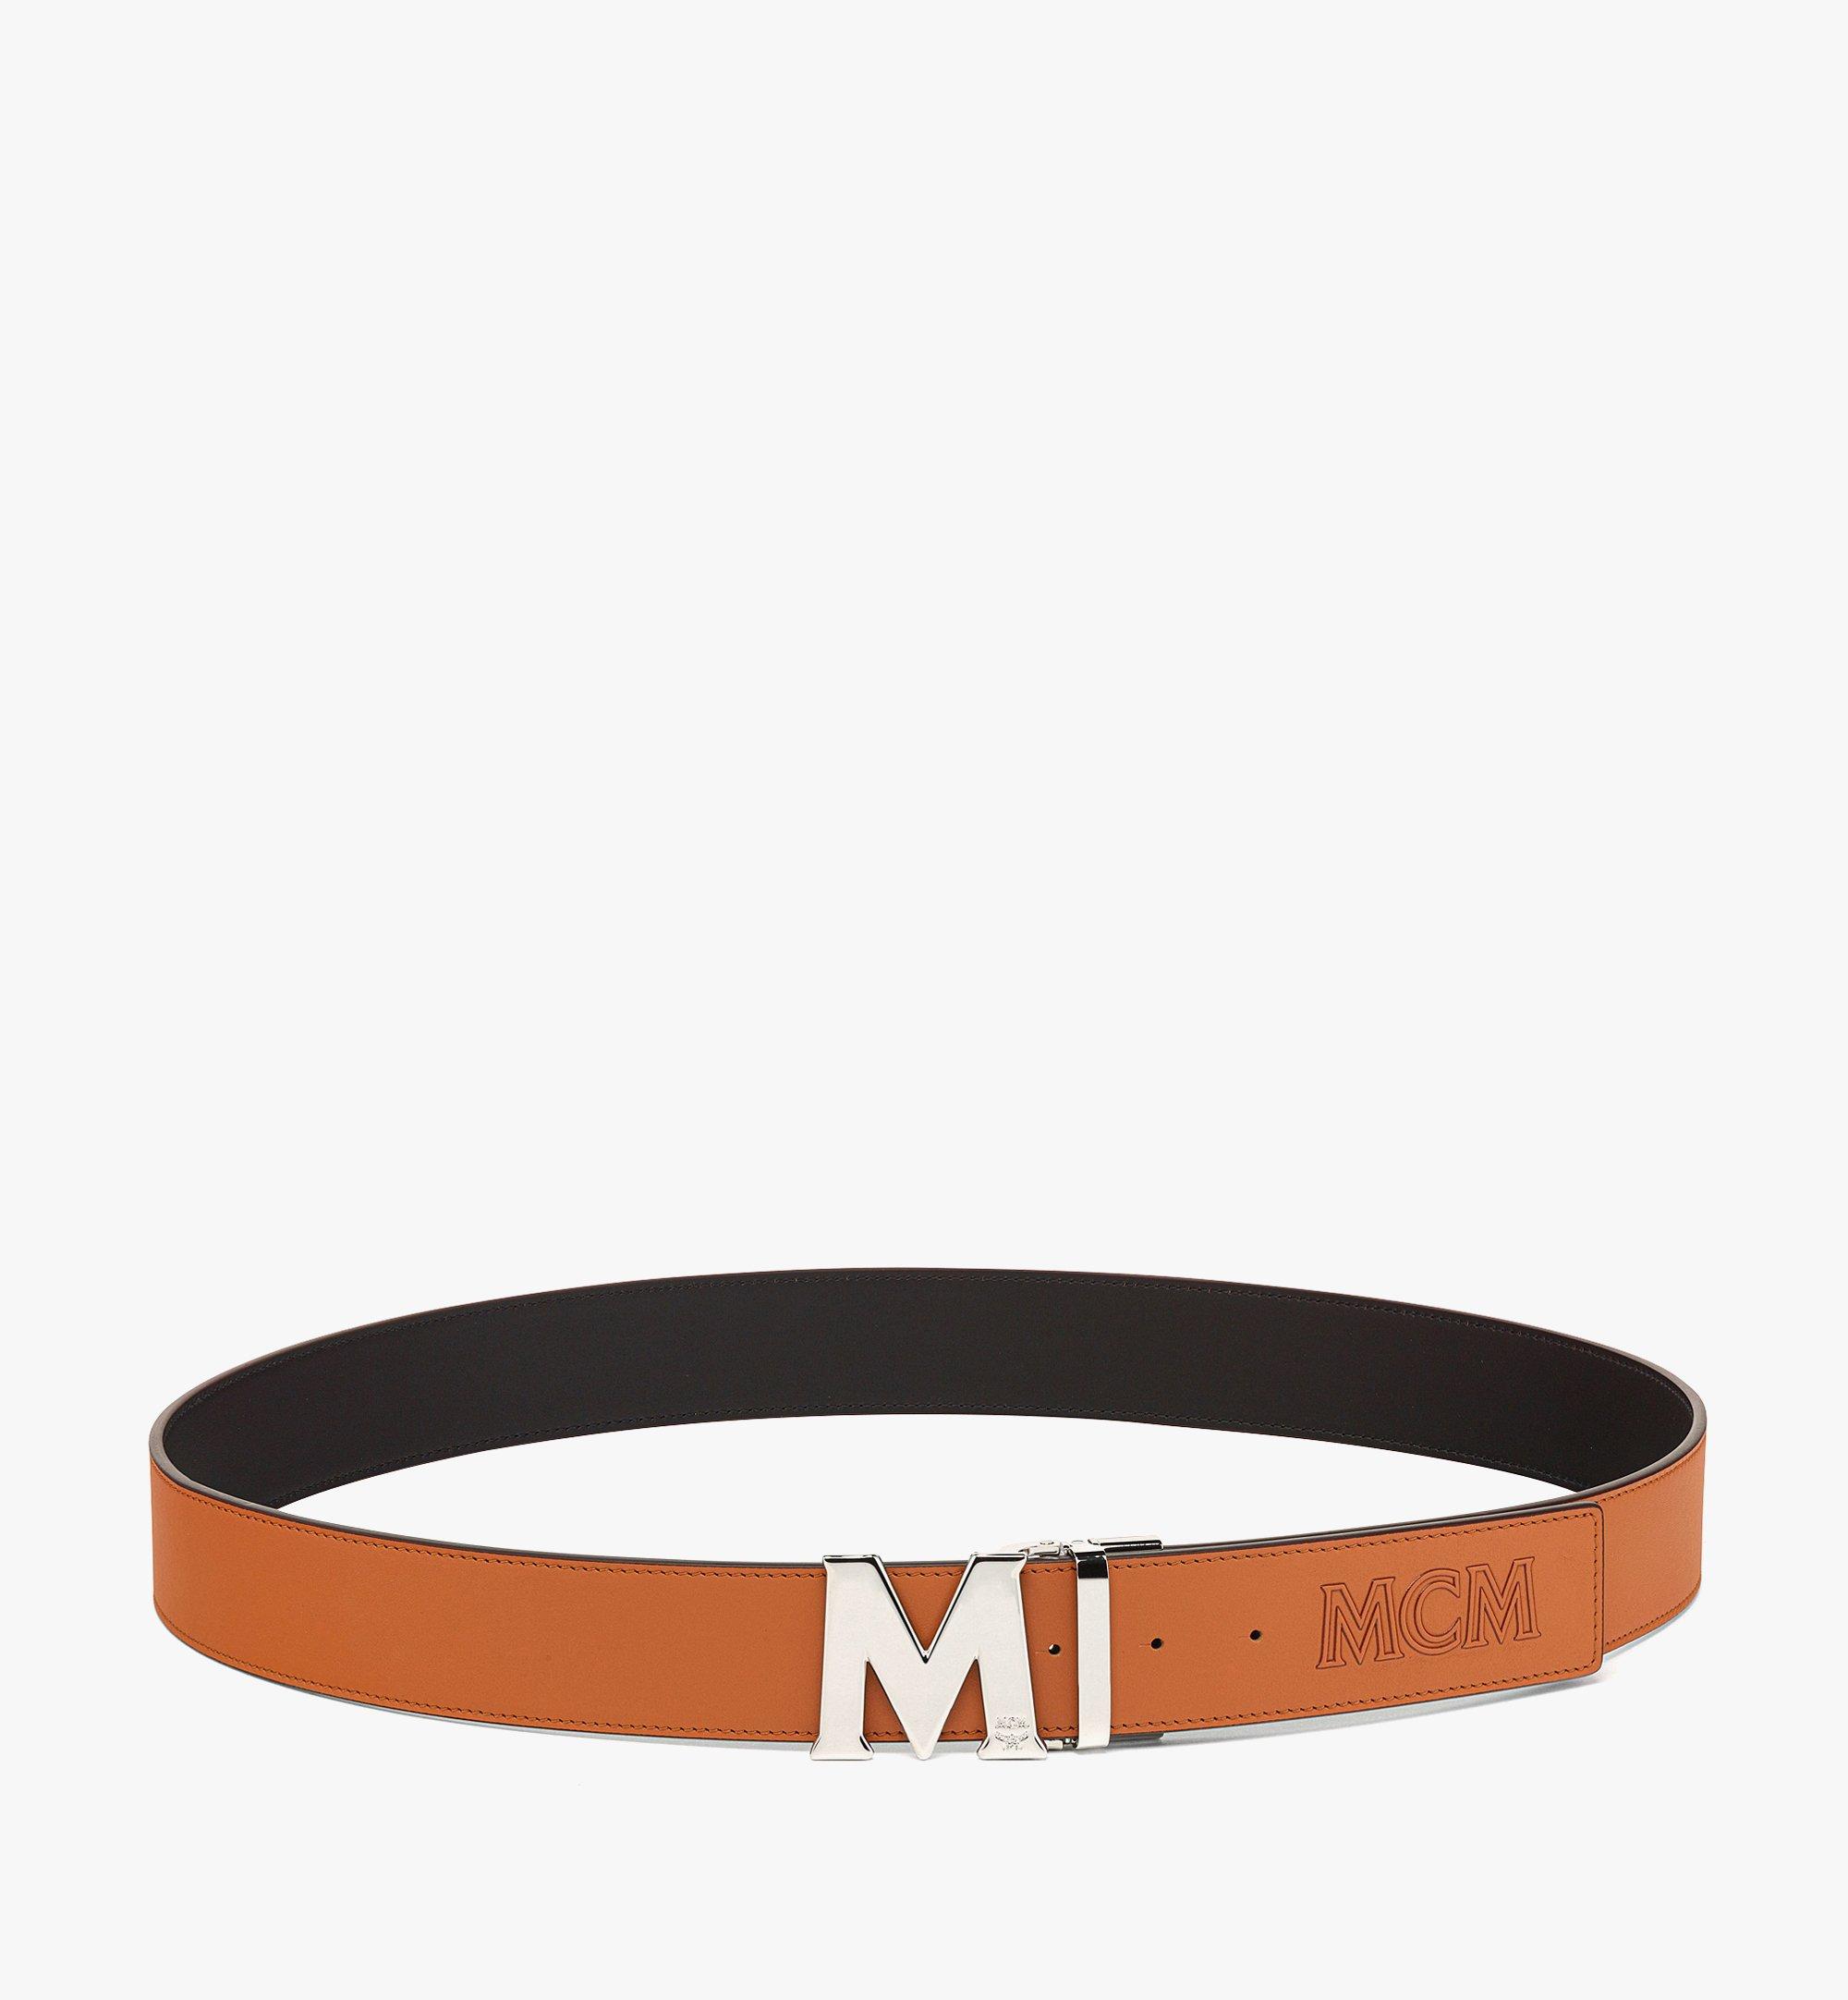 MCM Claus M Reversible Belt 1.75 in Spanish Calf Leather